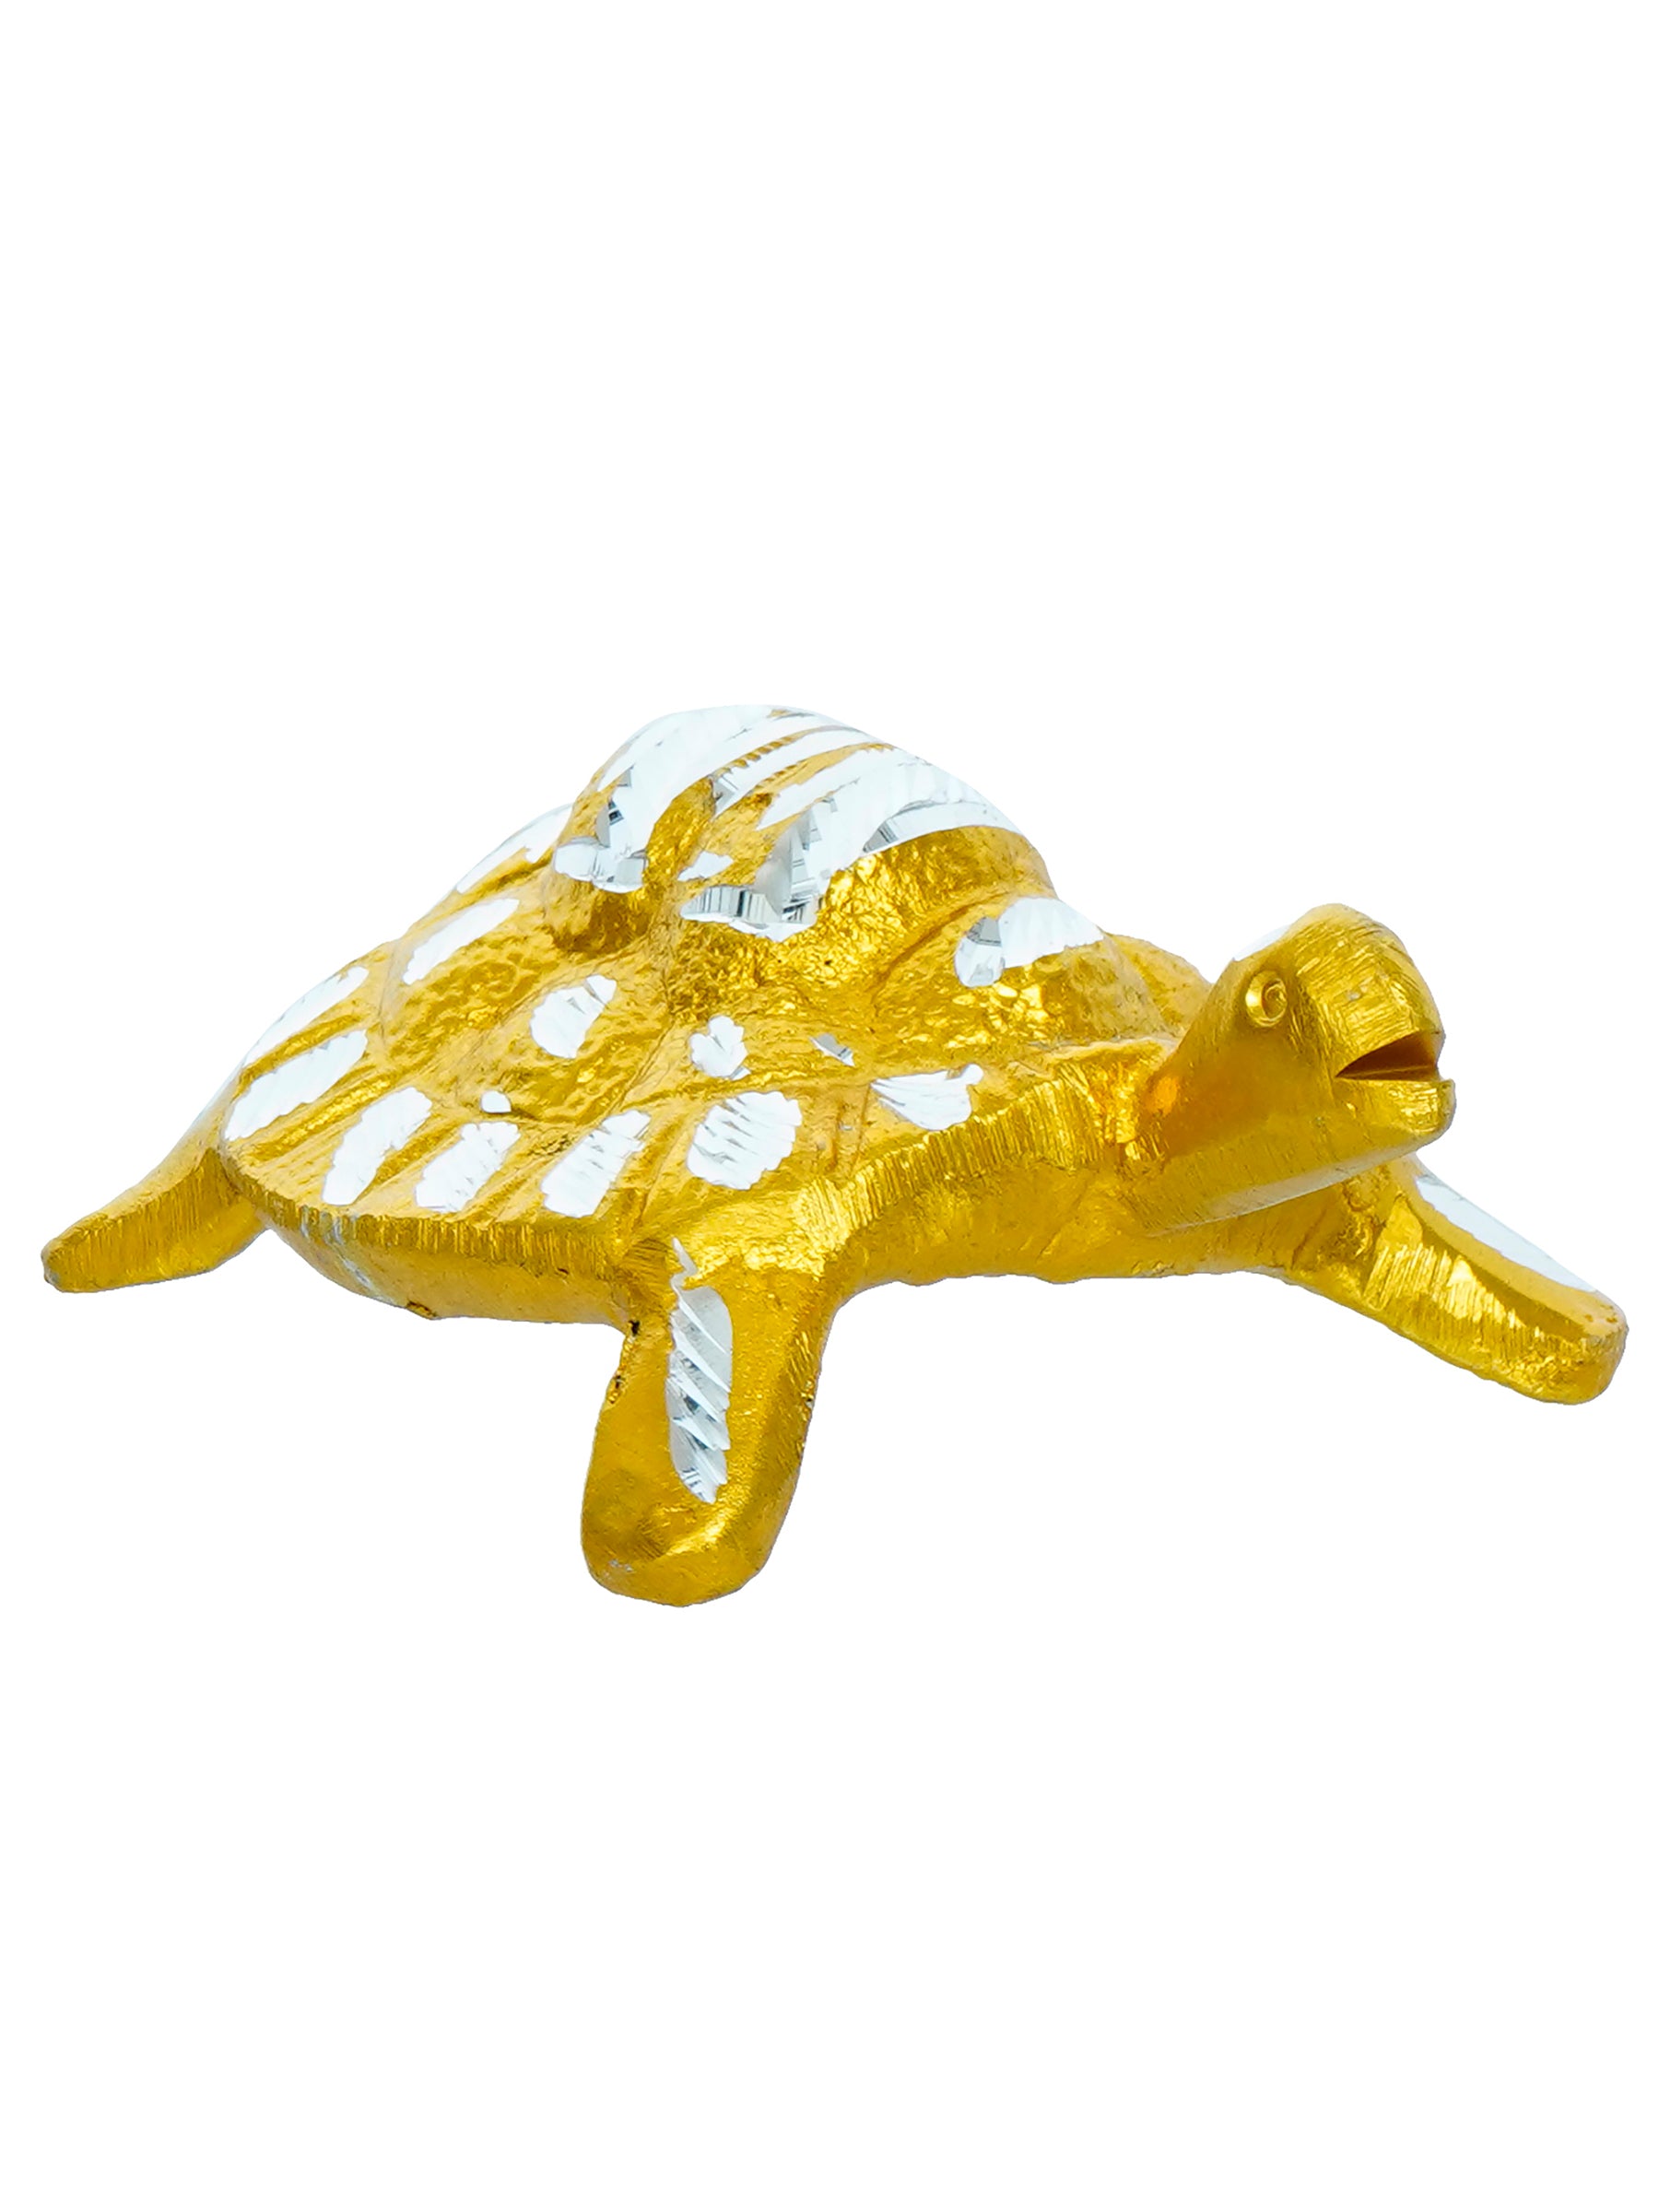 Golden Engraved Feng Shui Tortoise Figurines Decorative Metal Showpiece 4